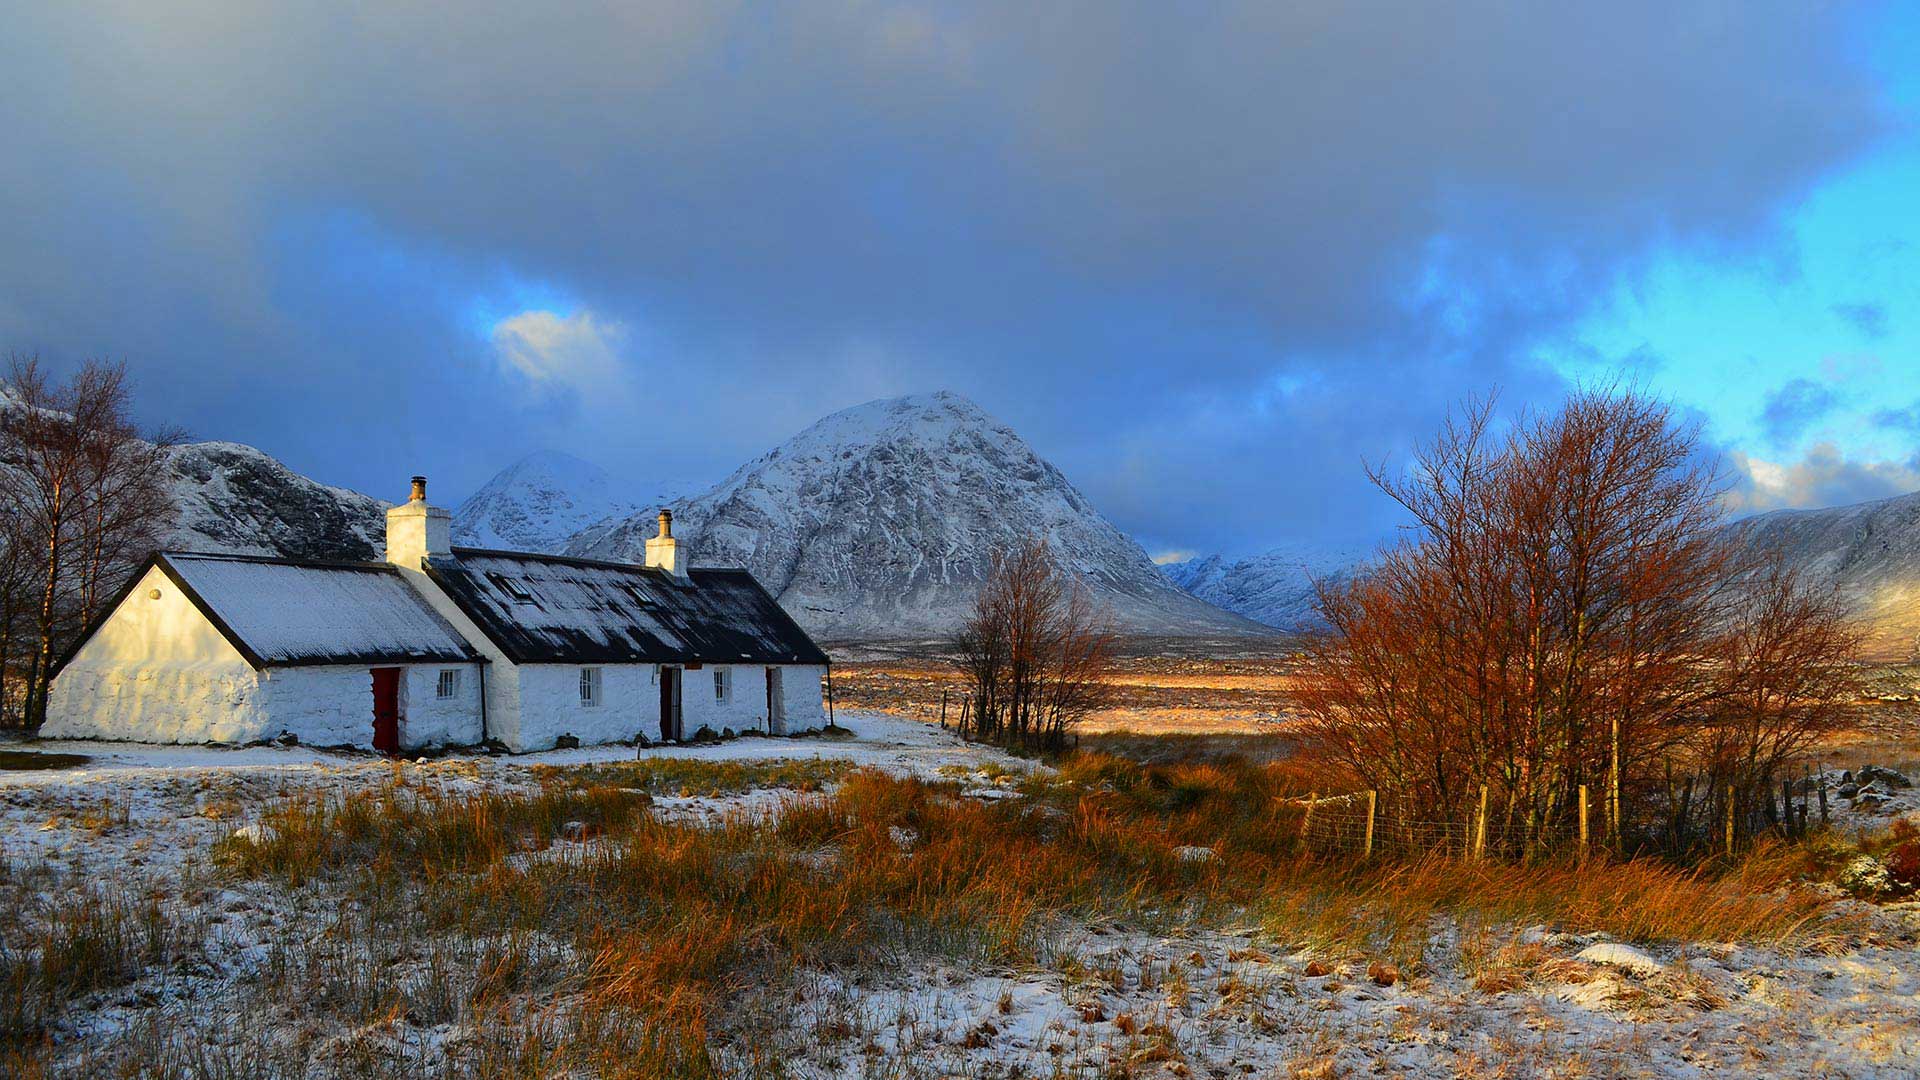 visit scotland in winter